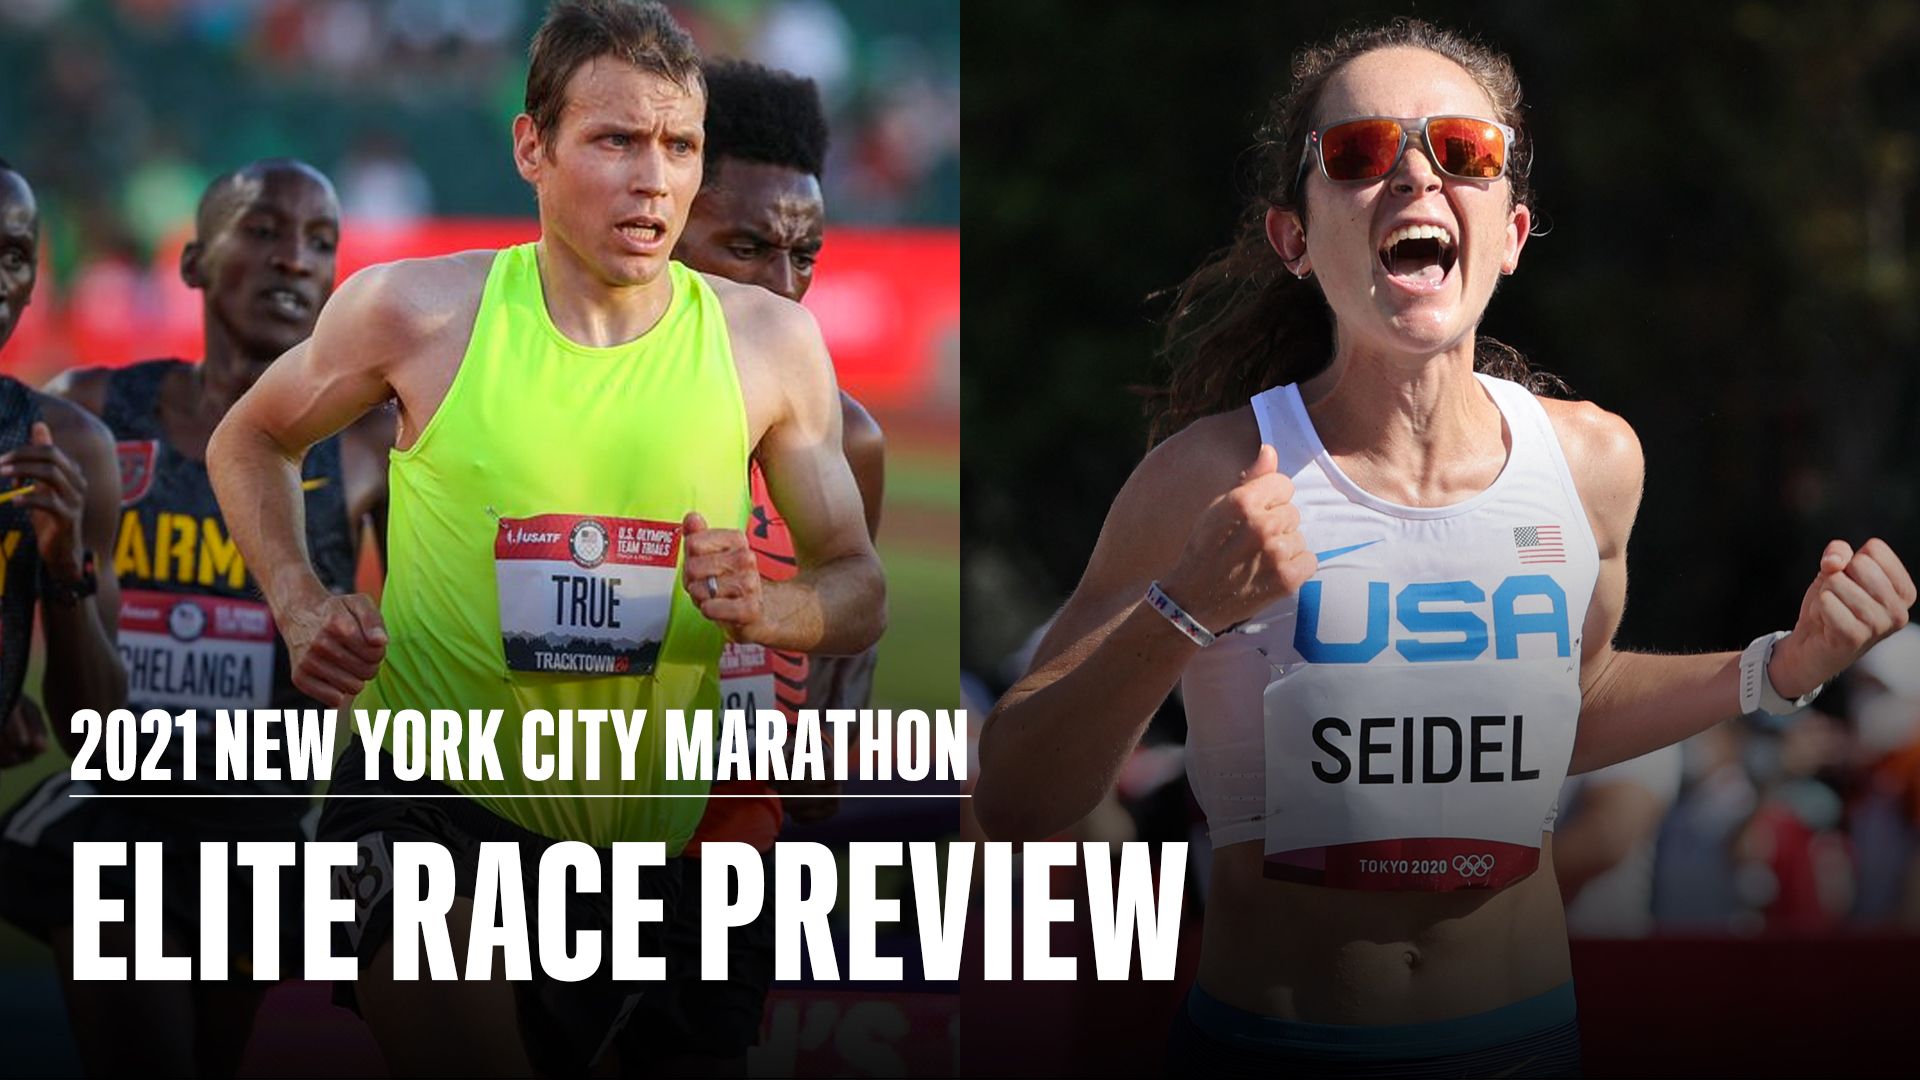 How to Watch the 2022 New York City Marathon